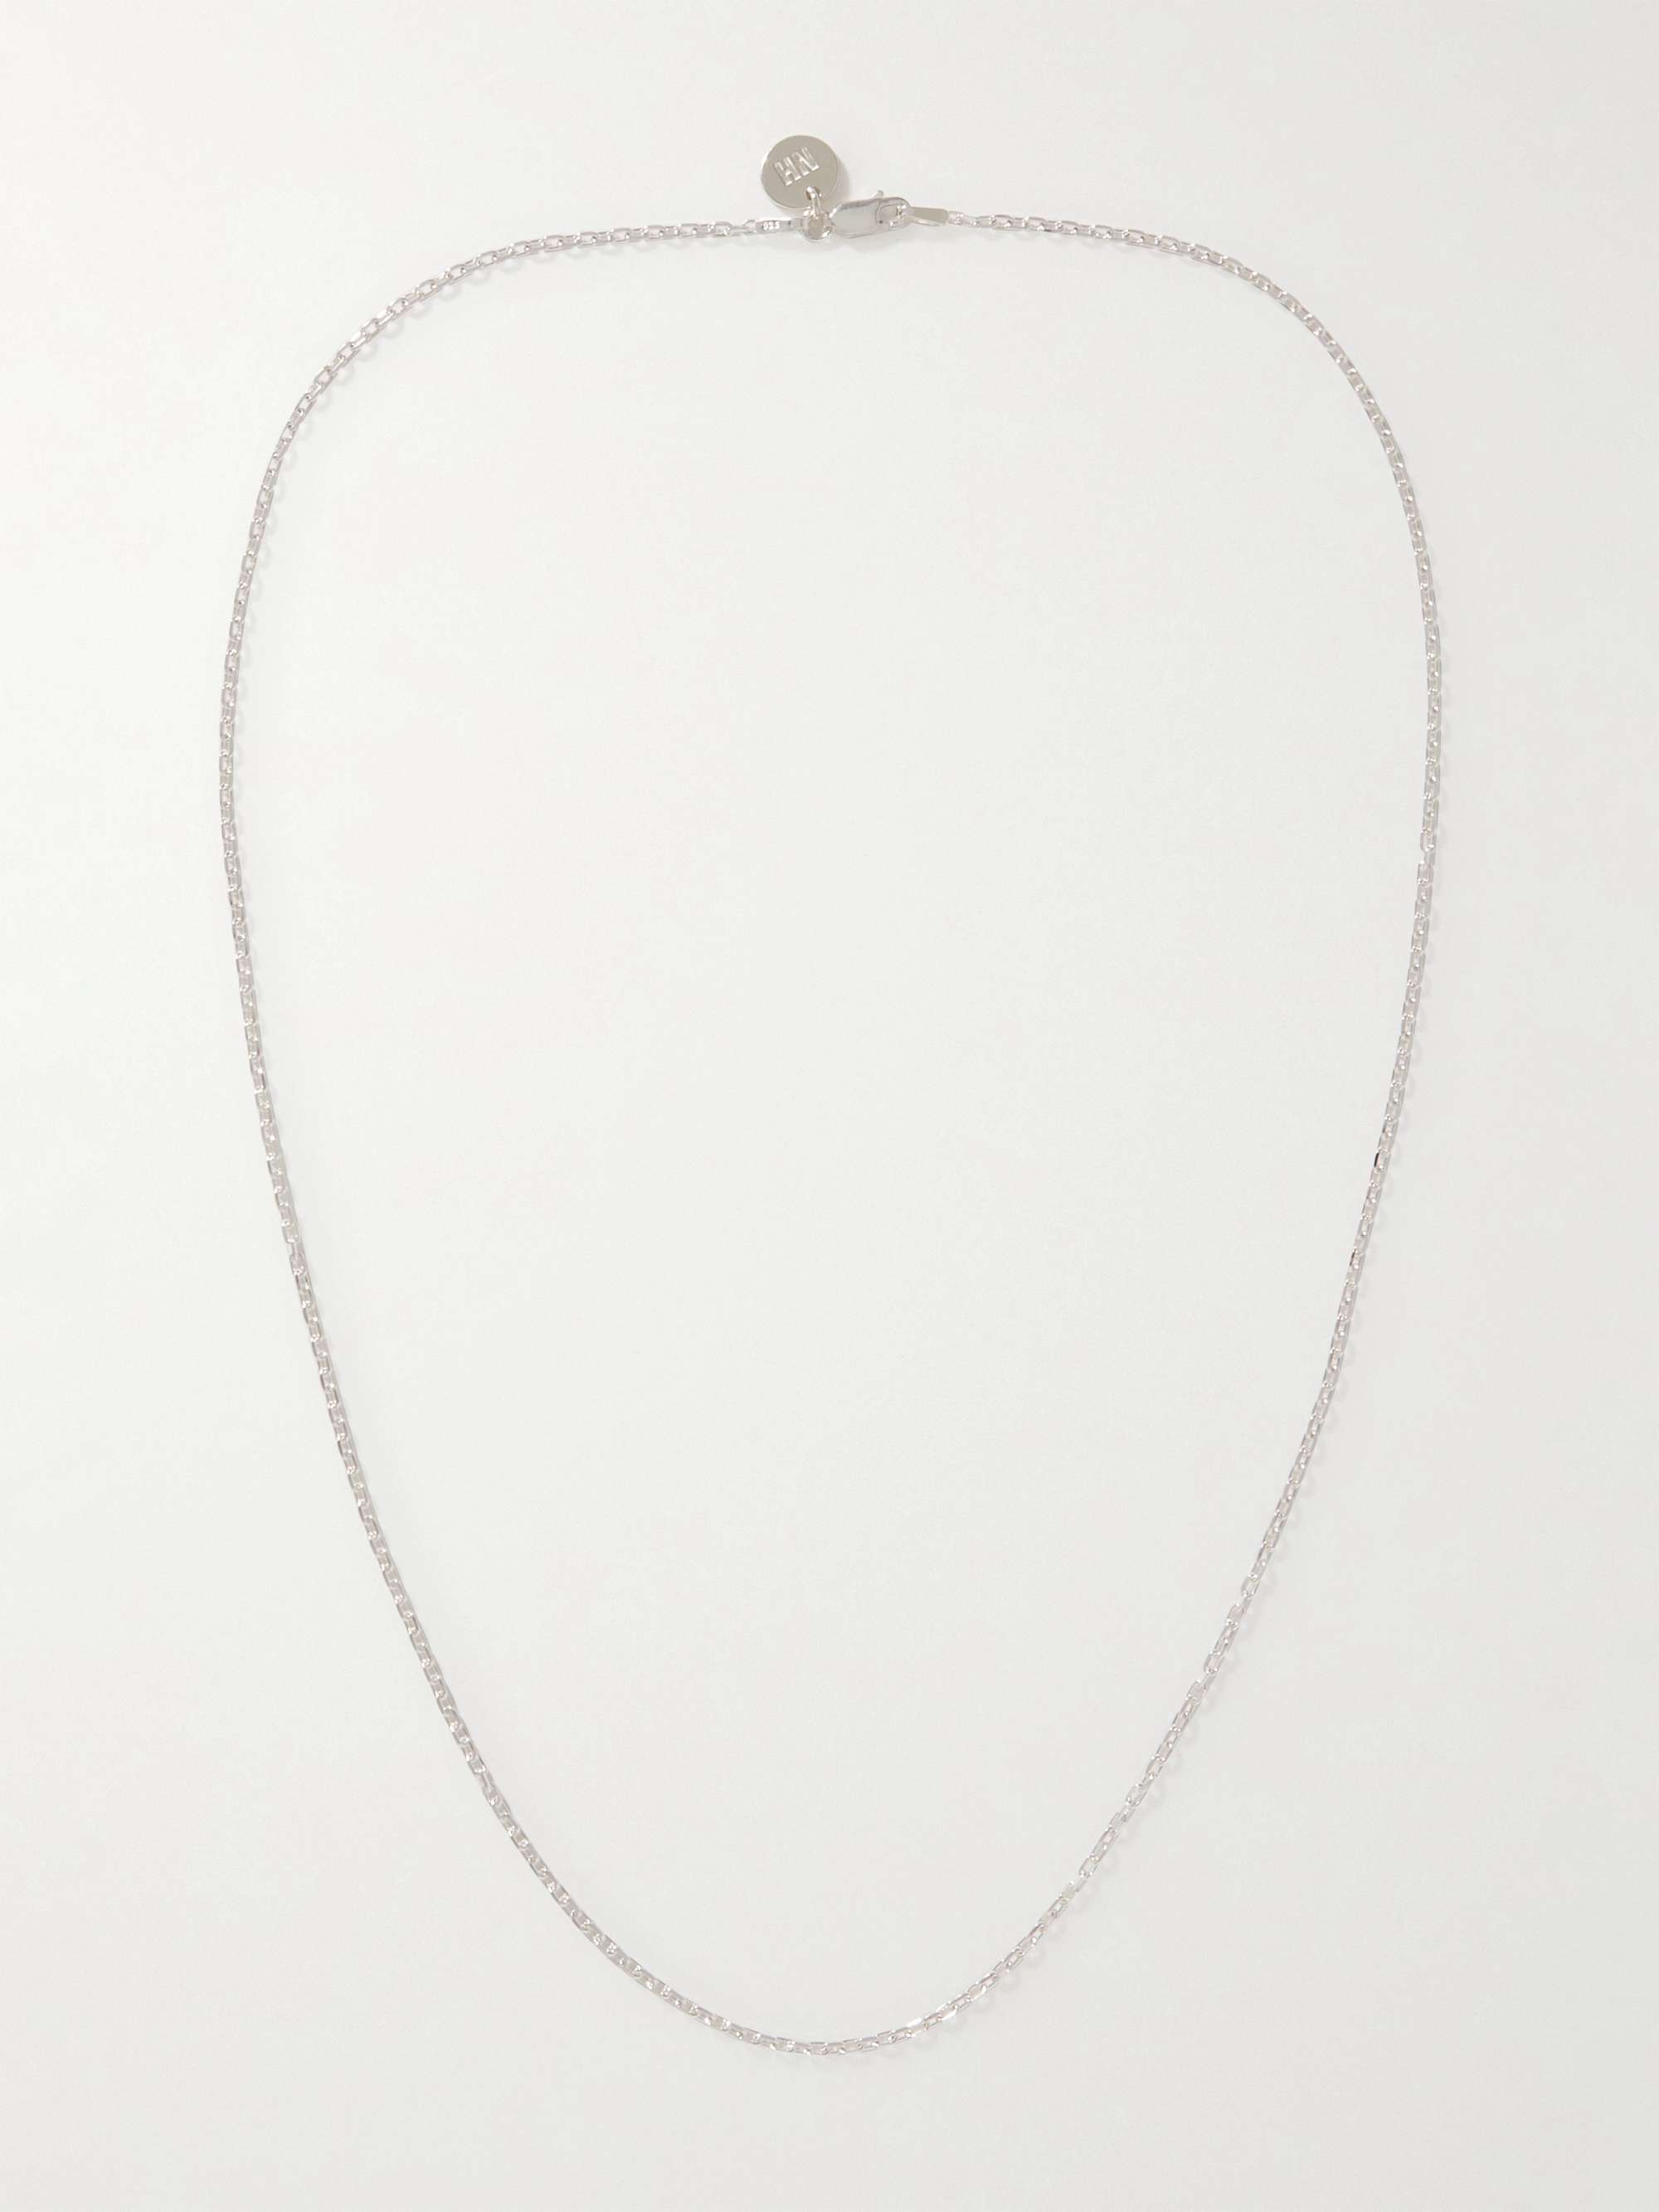 NEIGHBORHOOD Silver Chain Necklace